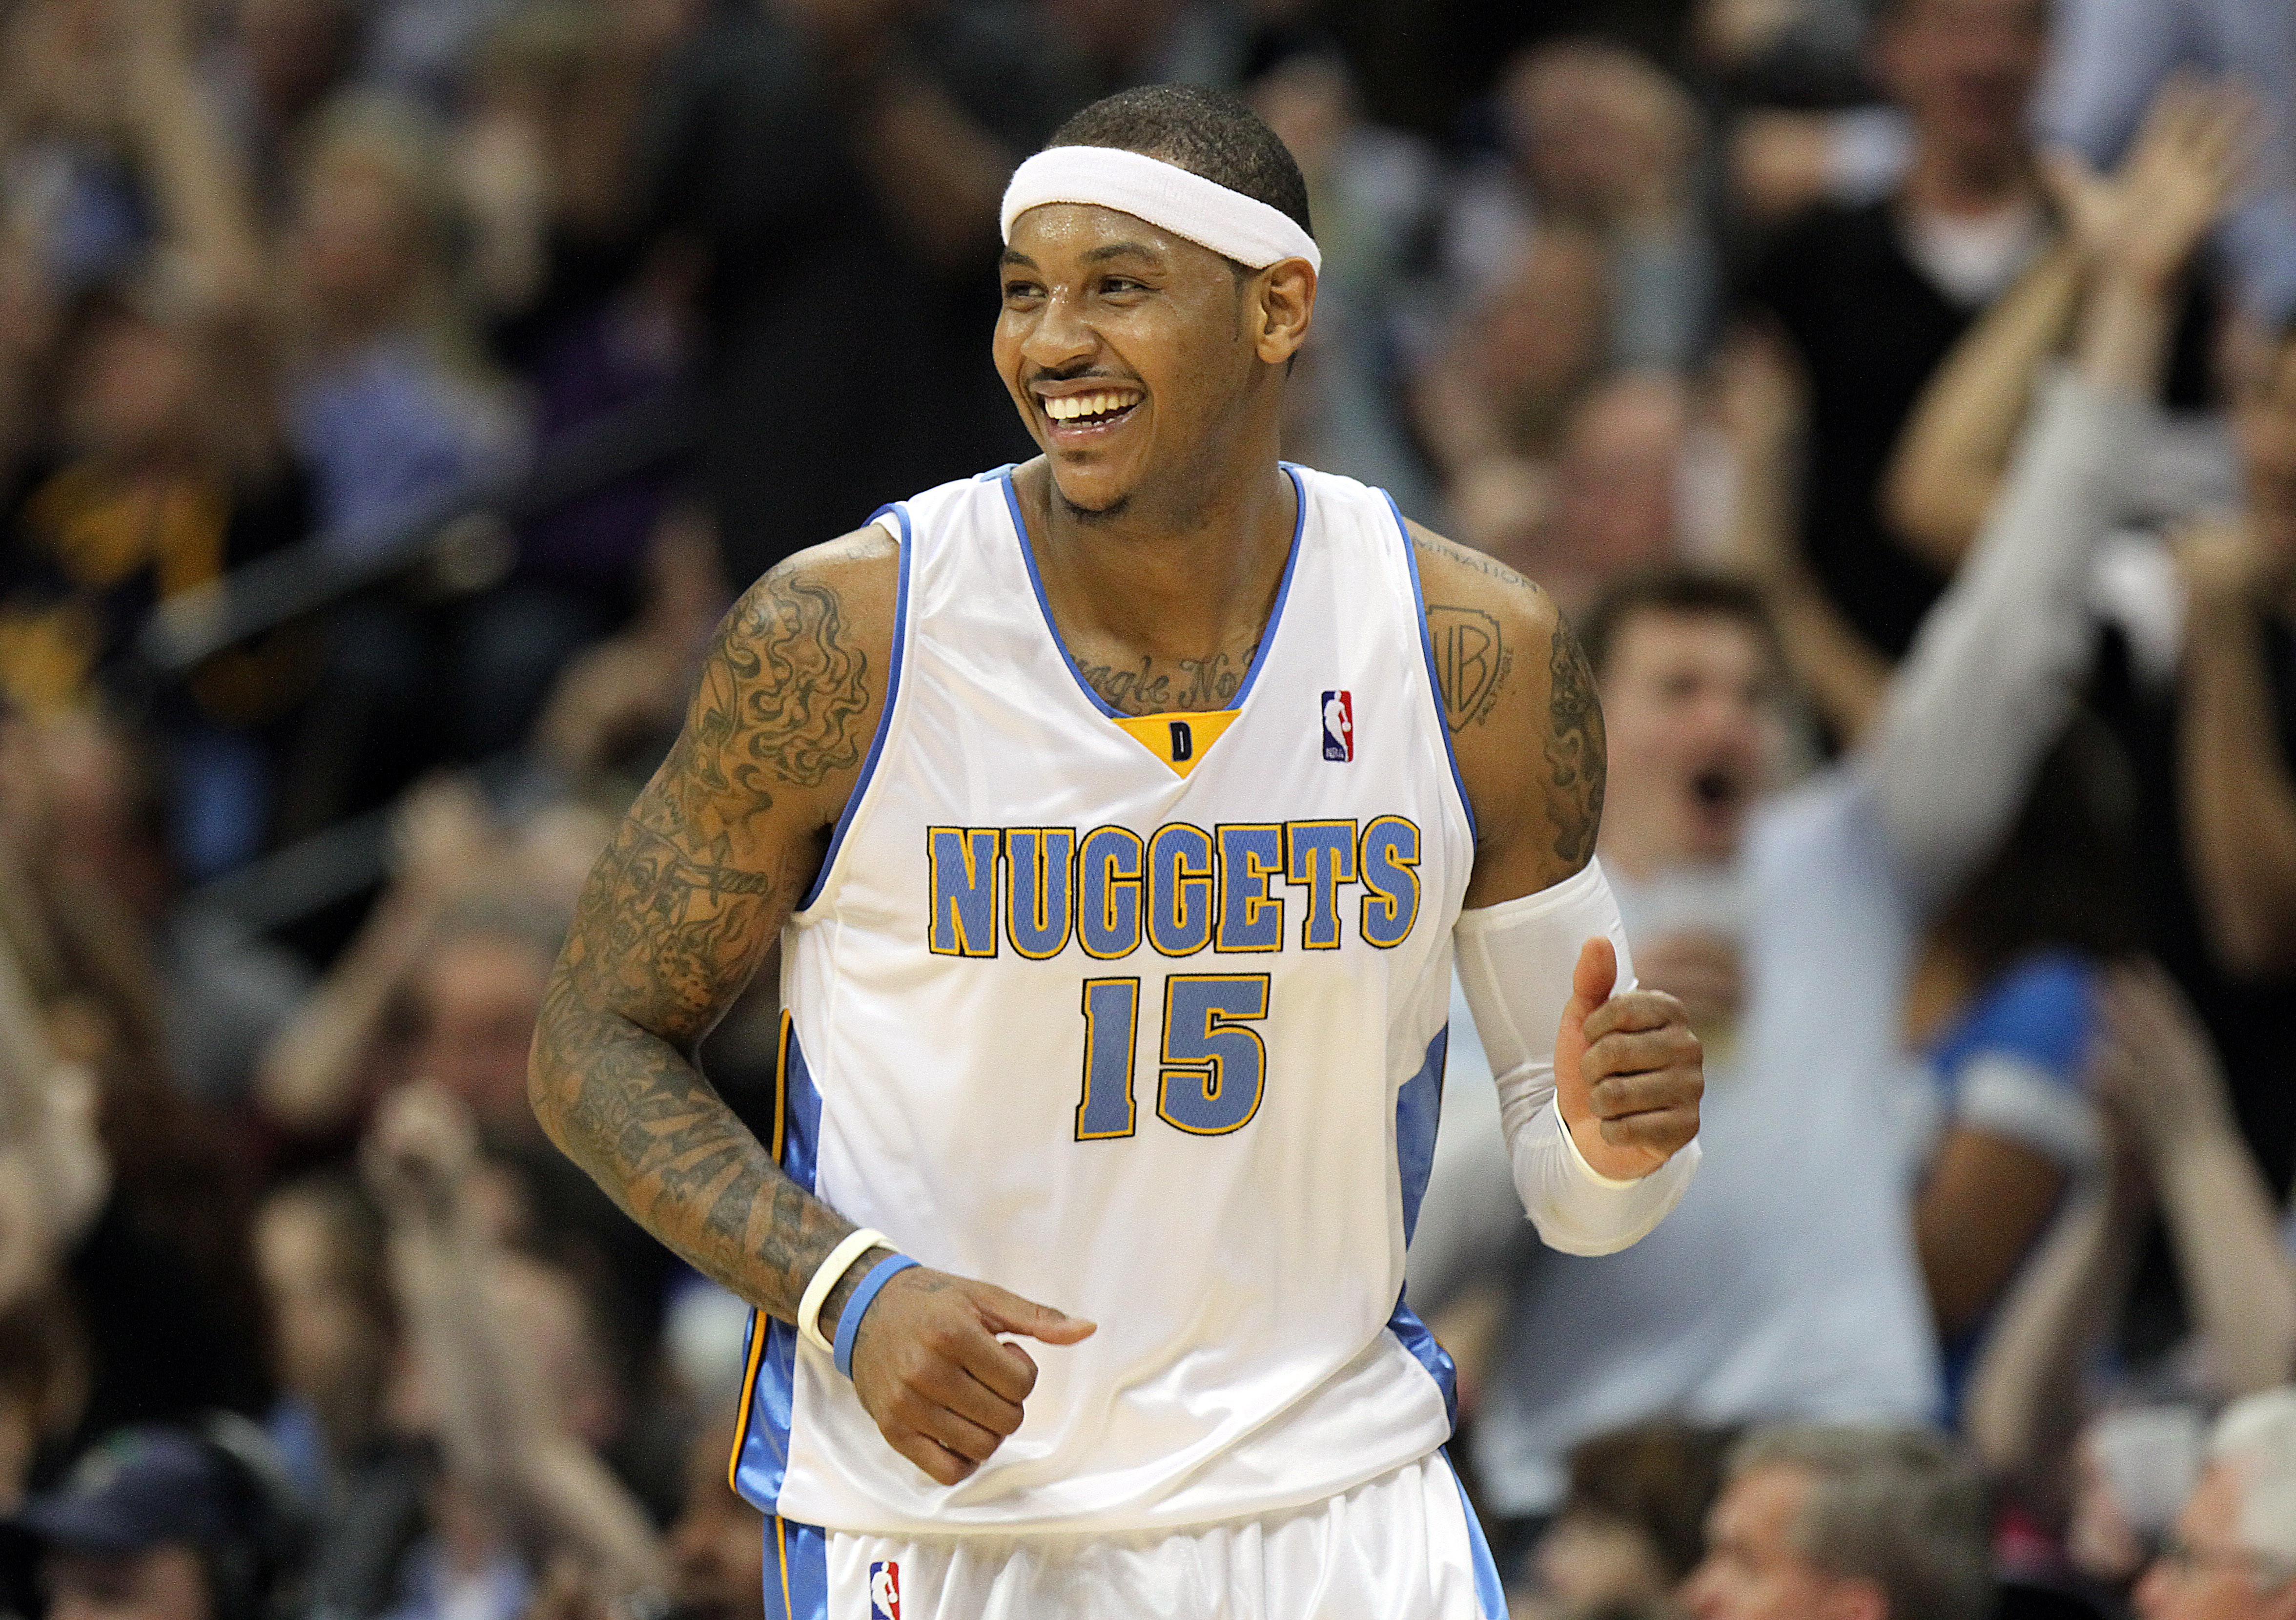 Denver Nuggets forward Carmelo Anthony (C) dunks against Dallas